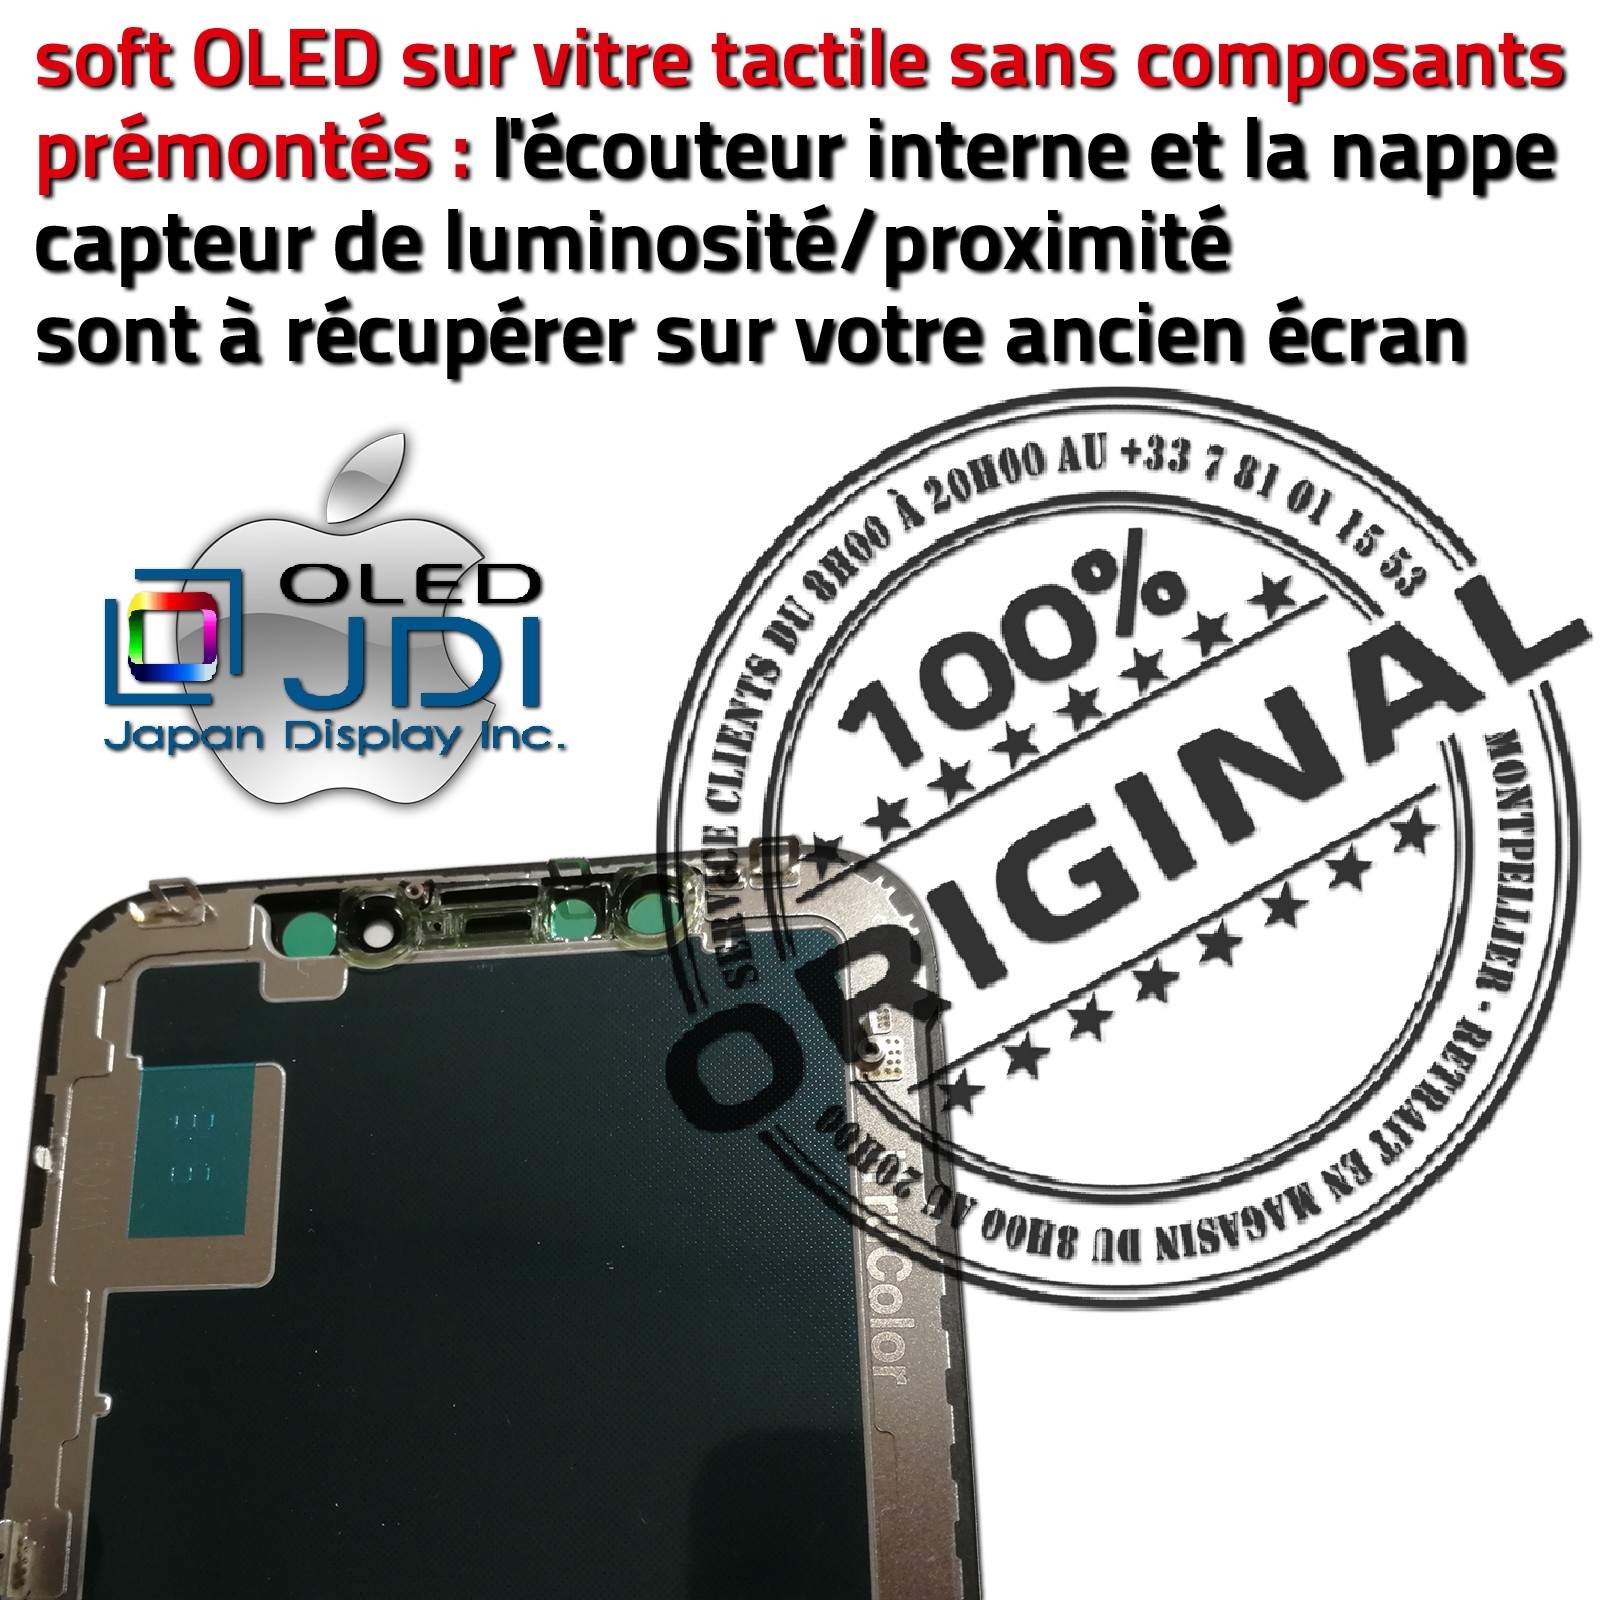 Ecran Complet Hard / Soft Oled Compatible iPhone 11 Pro Noir